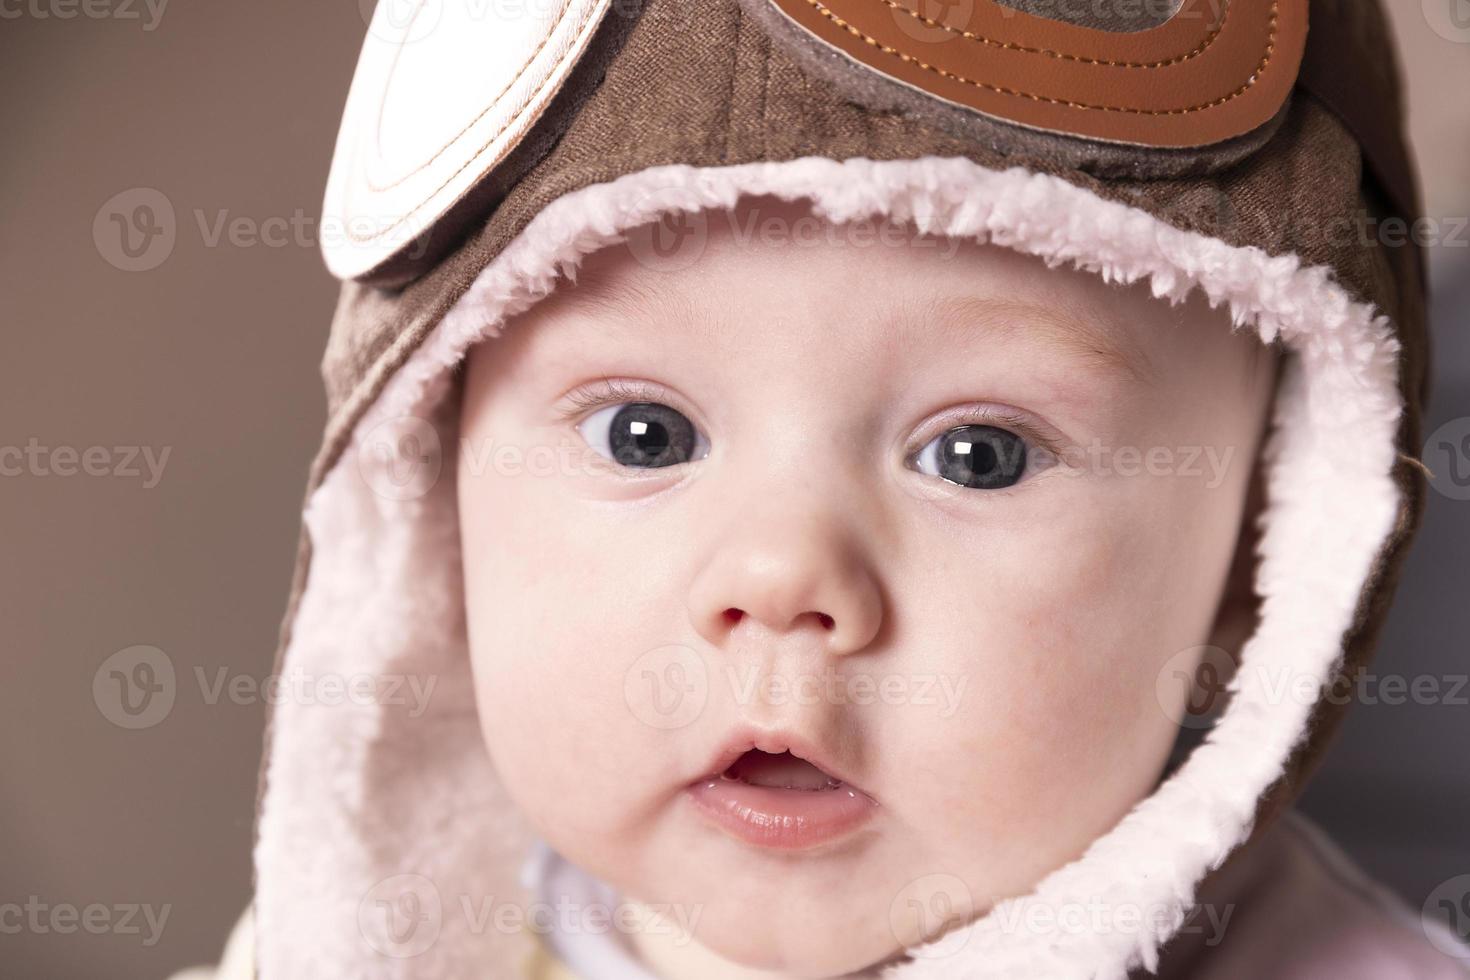 Baby aviator, wearing a pilot hat, close up portrait. photo